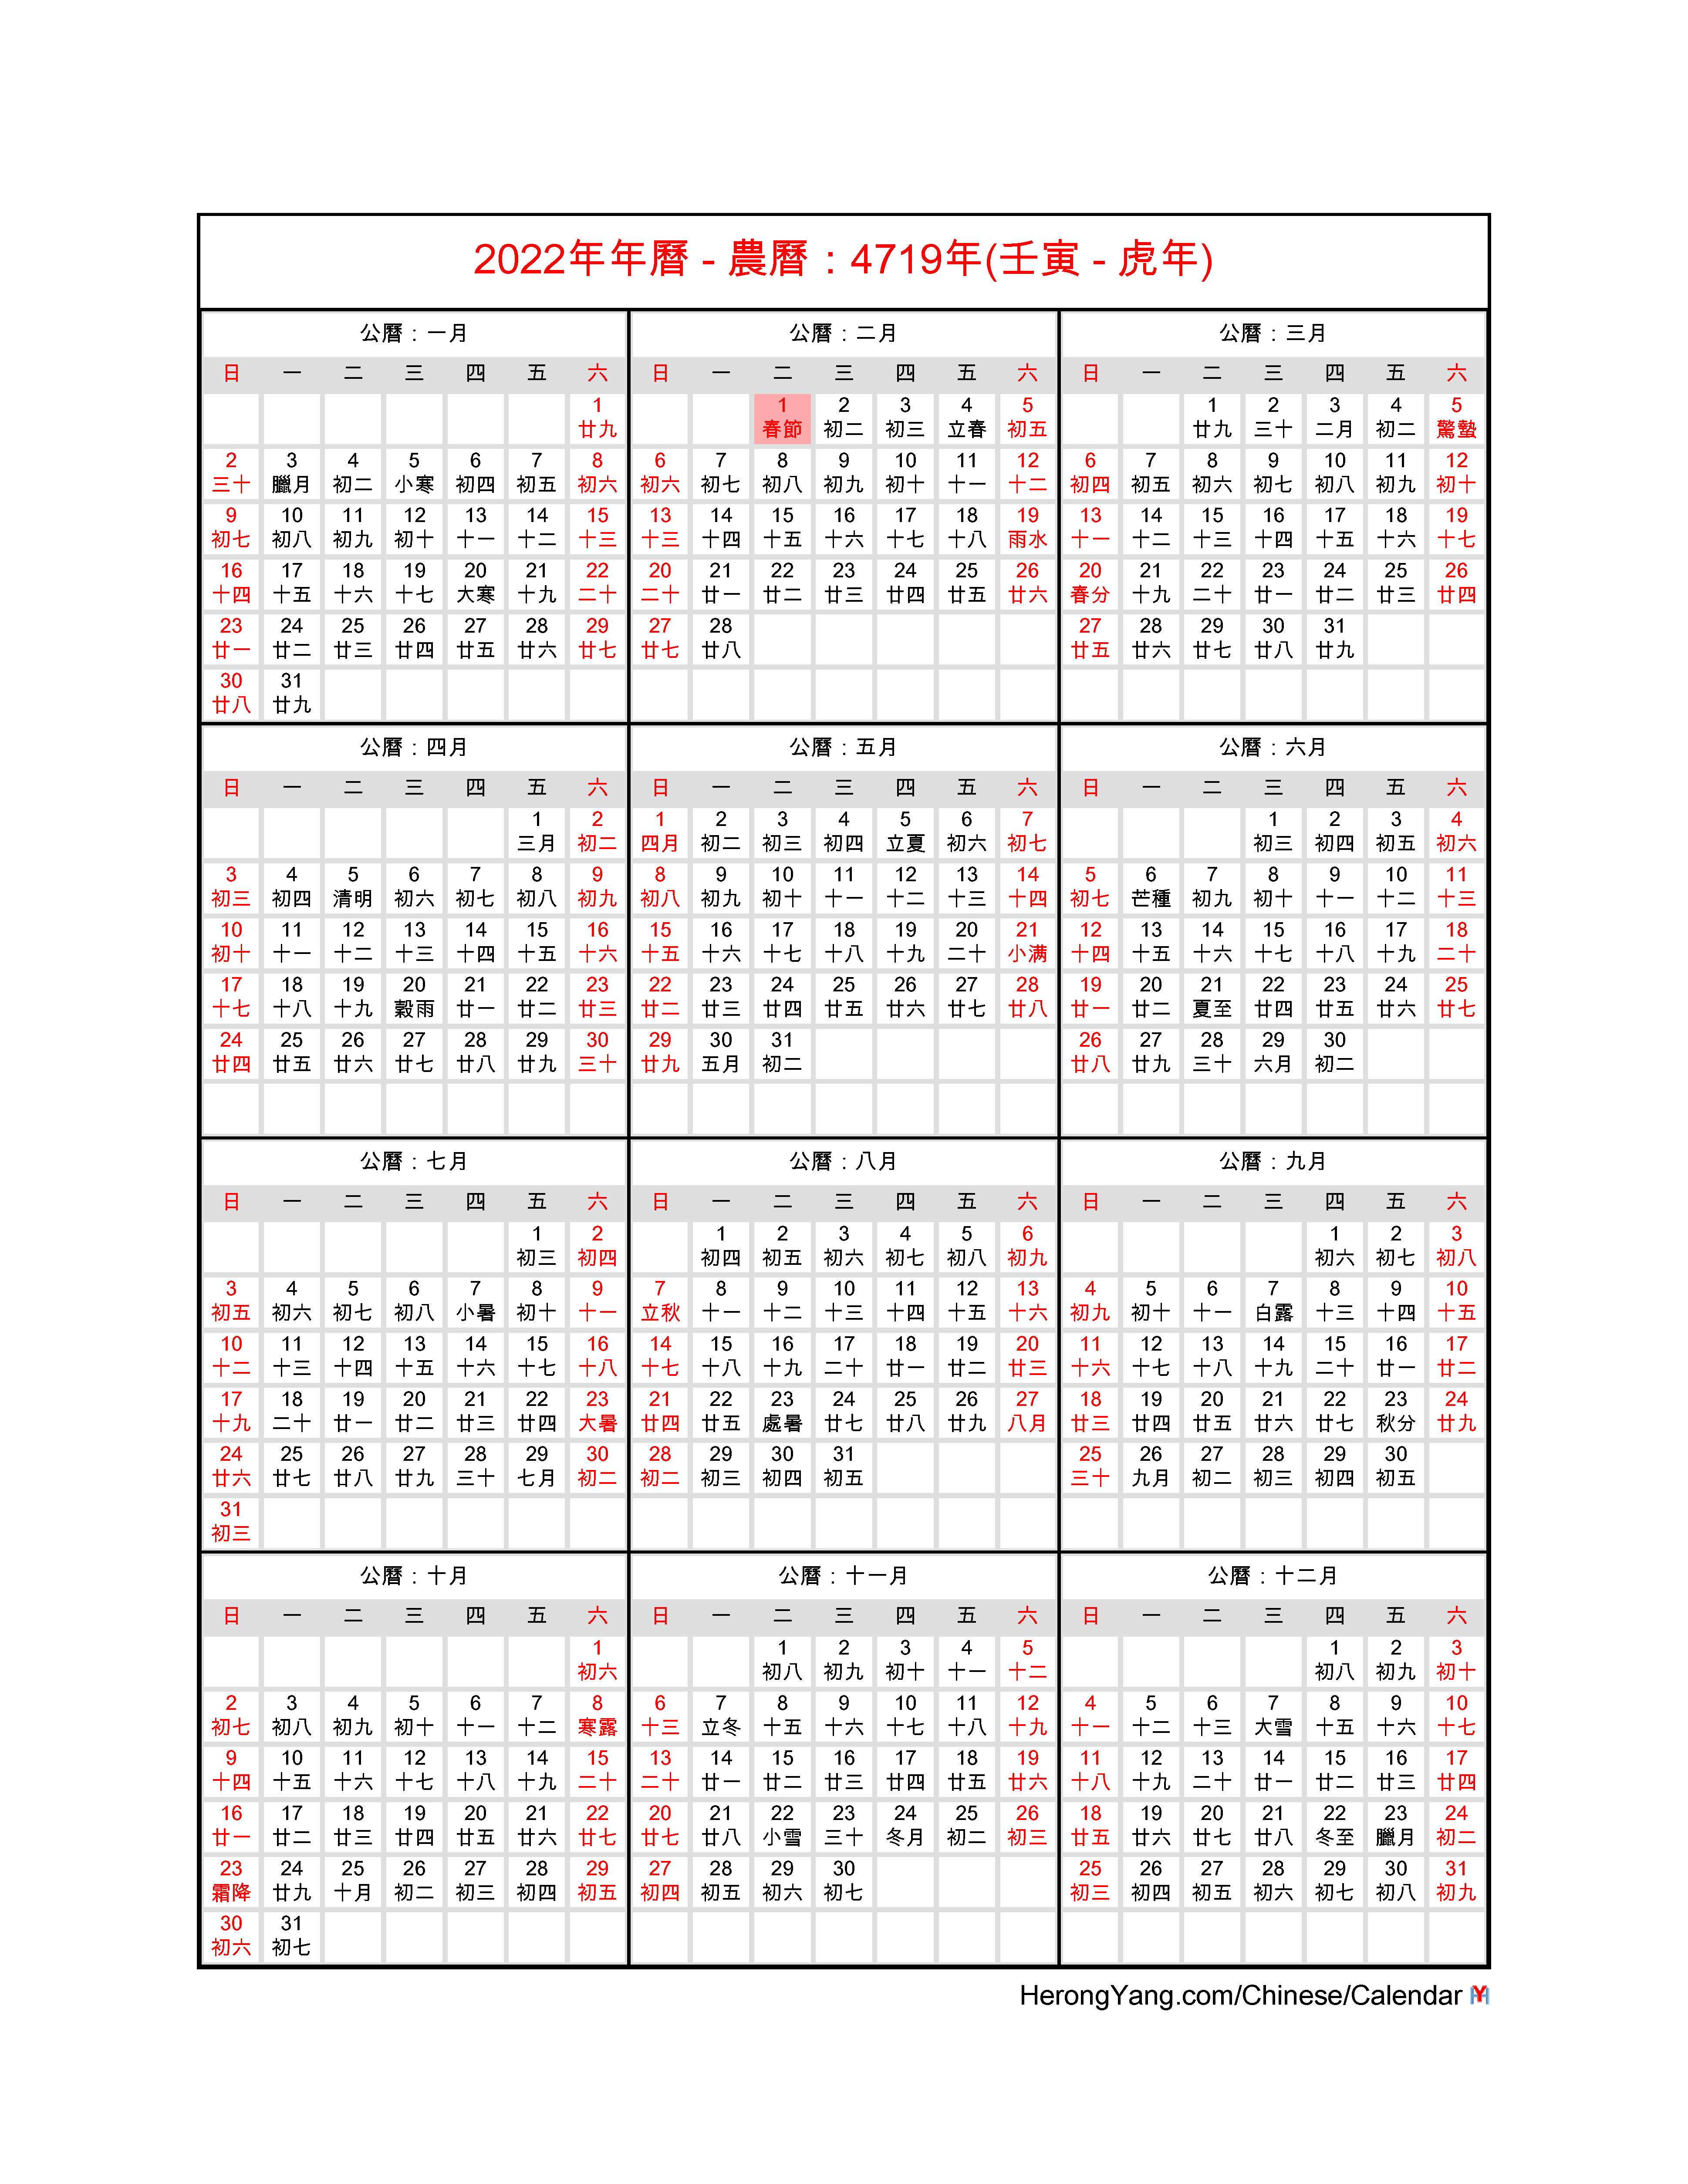 December Lunar Calendar 2022 Free Chinese Calendar 2022 - Year Of The Tiger